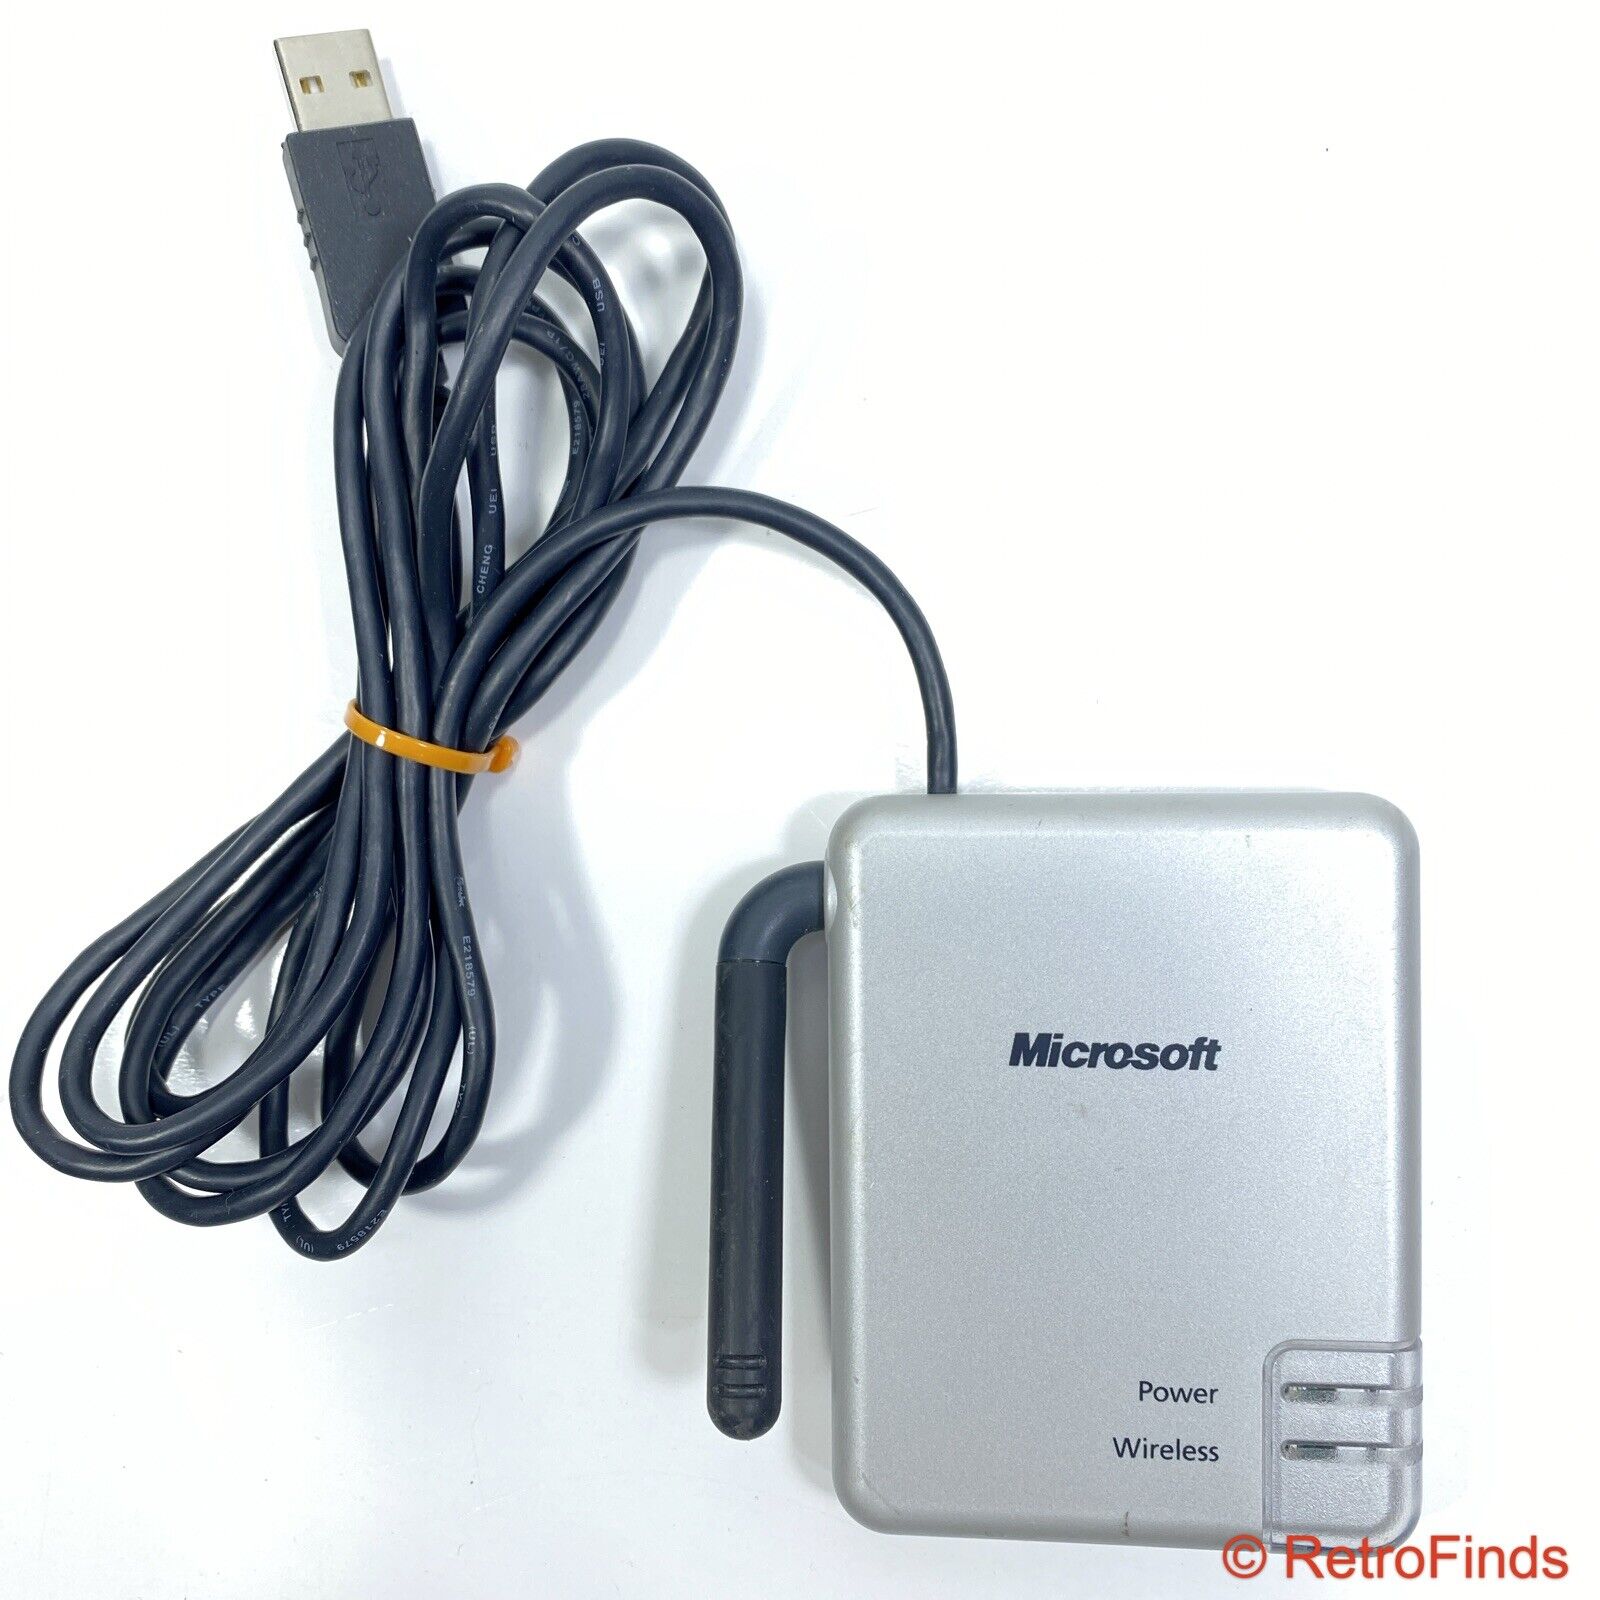 Microsoft Broadband Networking Wireless USB Adapter Model # MN-510